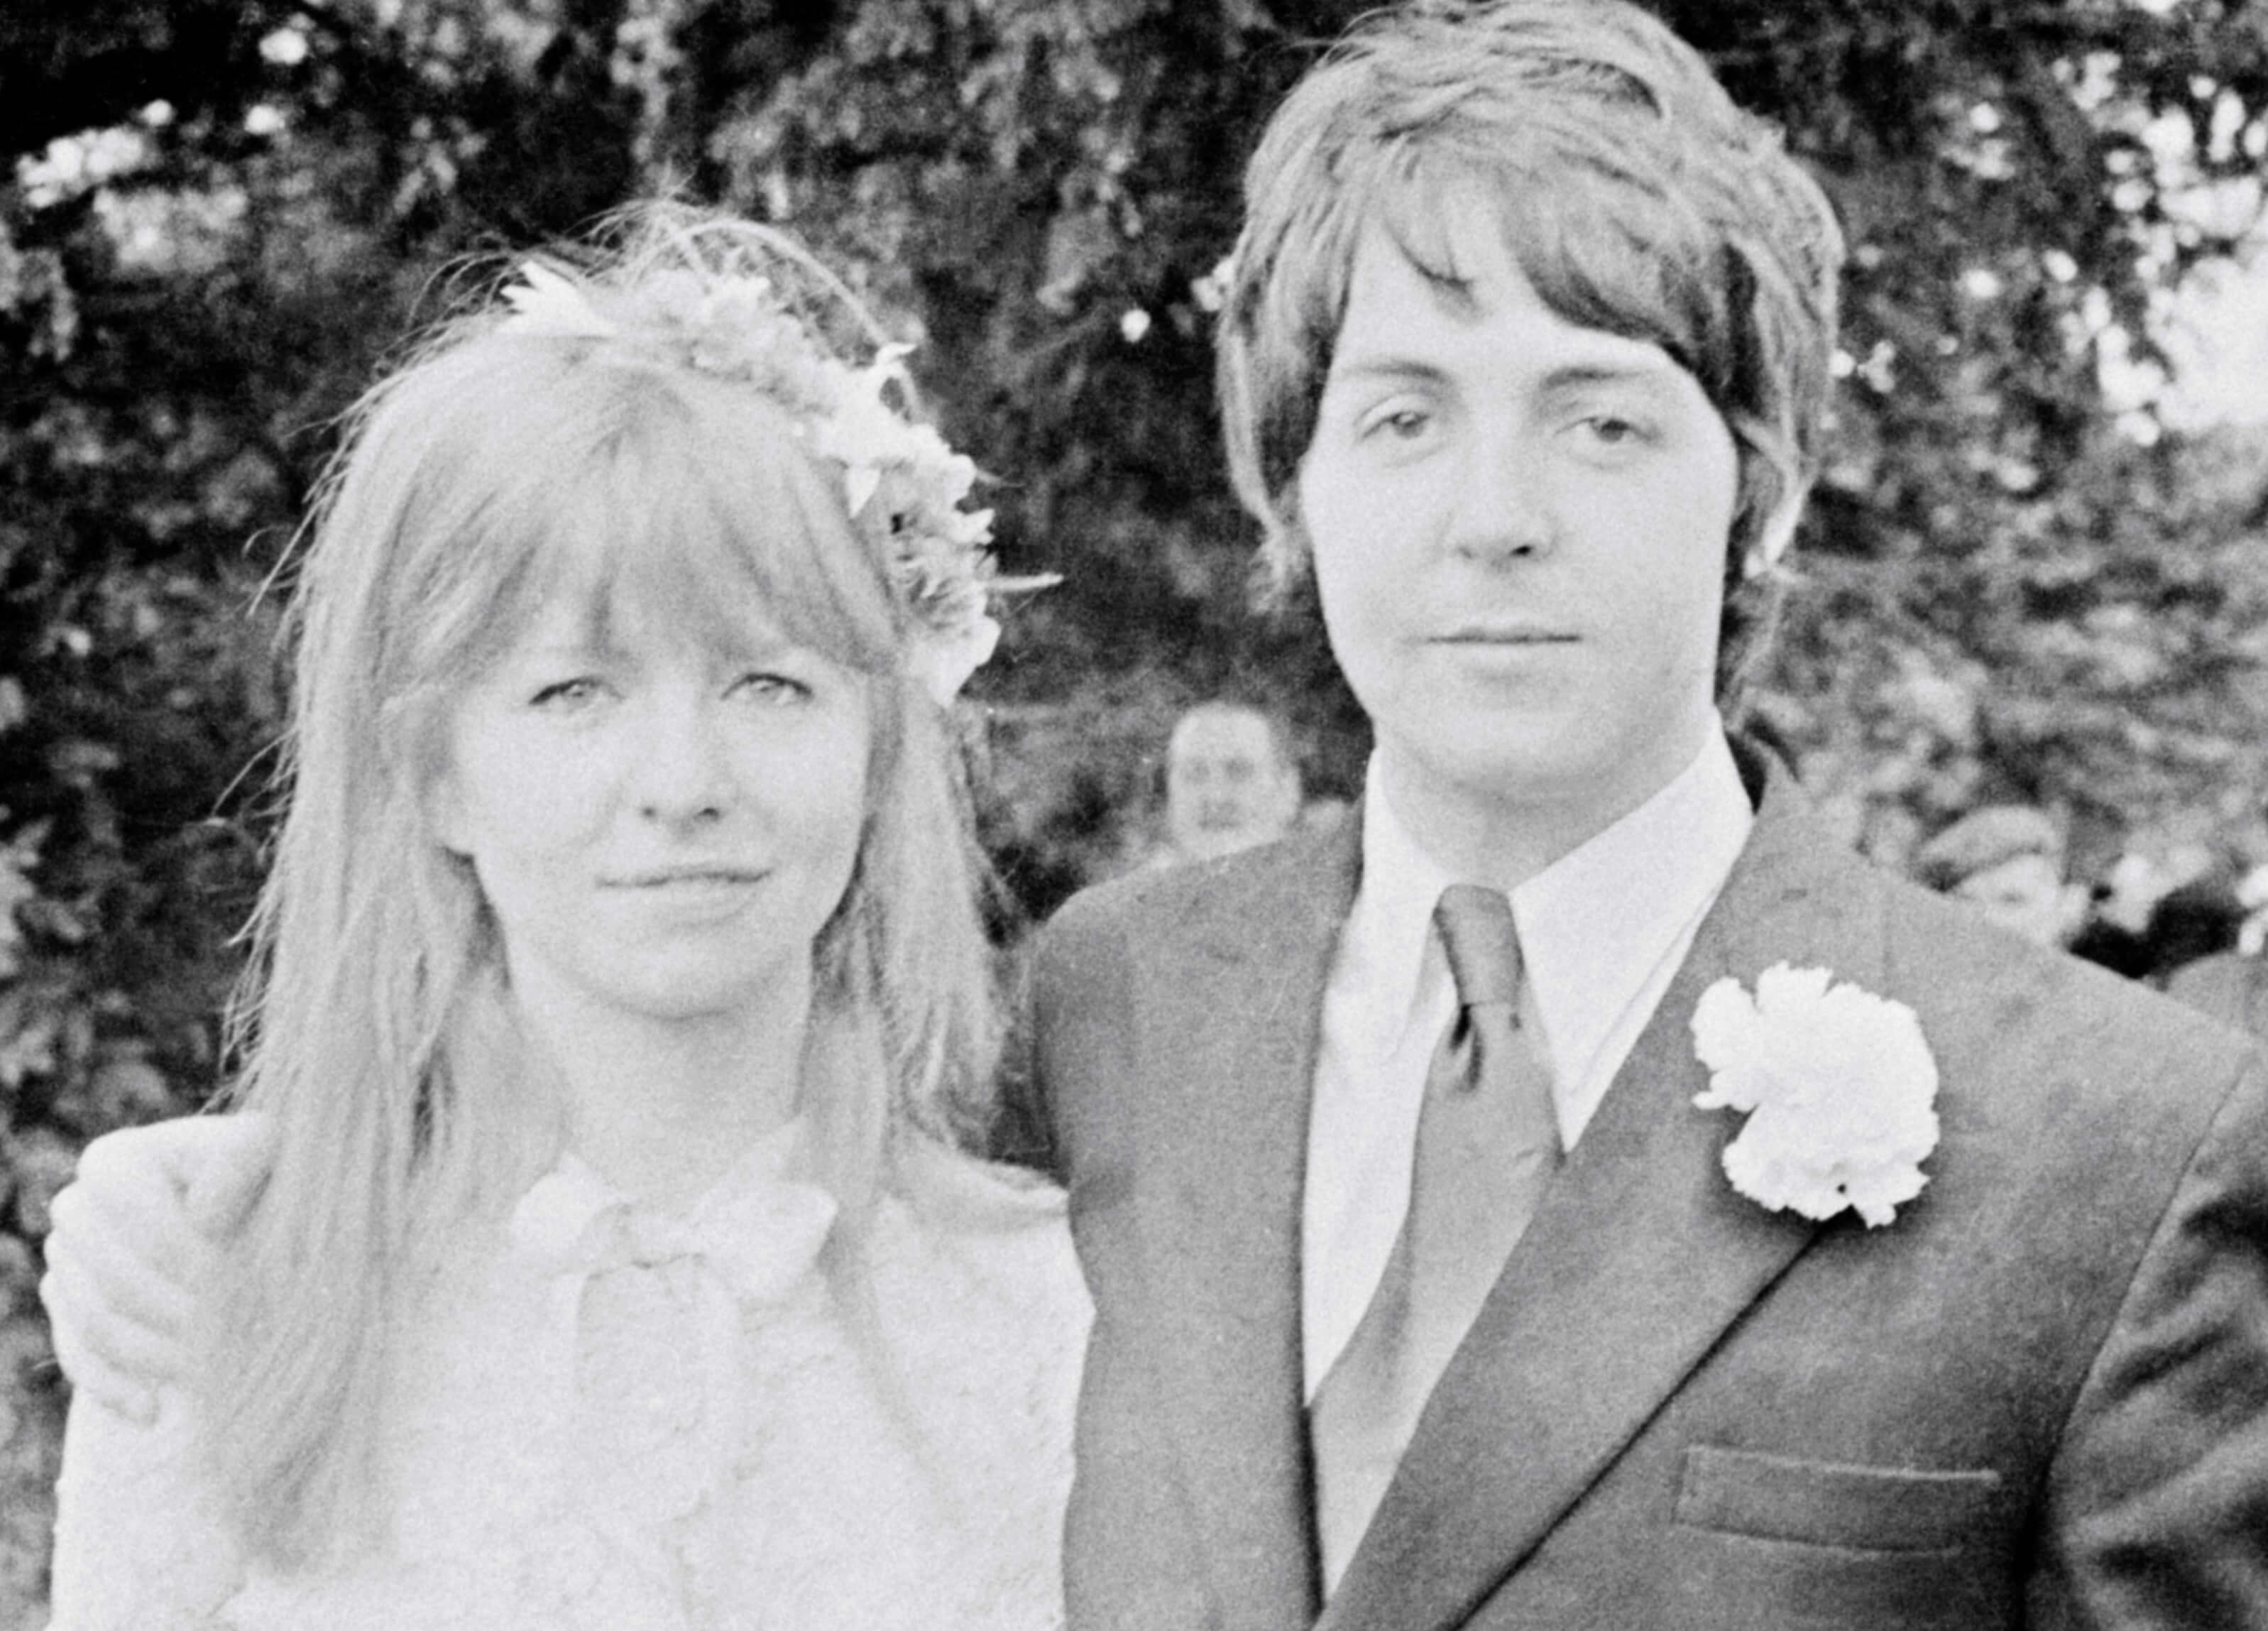 Paul McCartney Said The Beatles' 'Let It Be' Is 'Quasi-Religious'